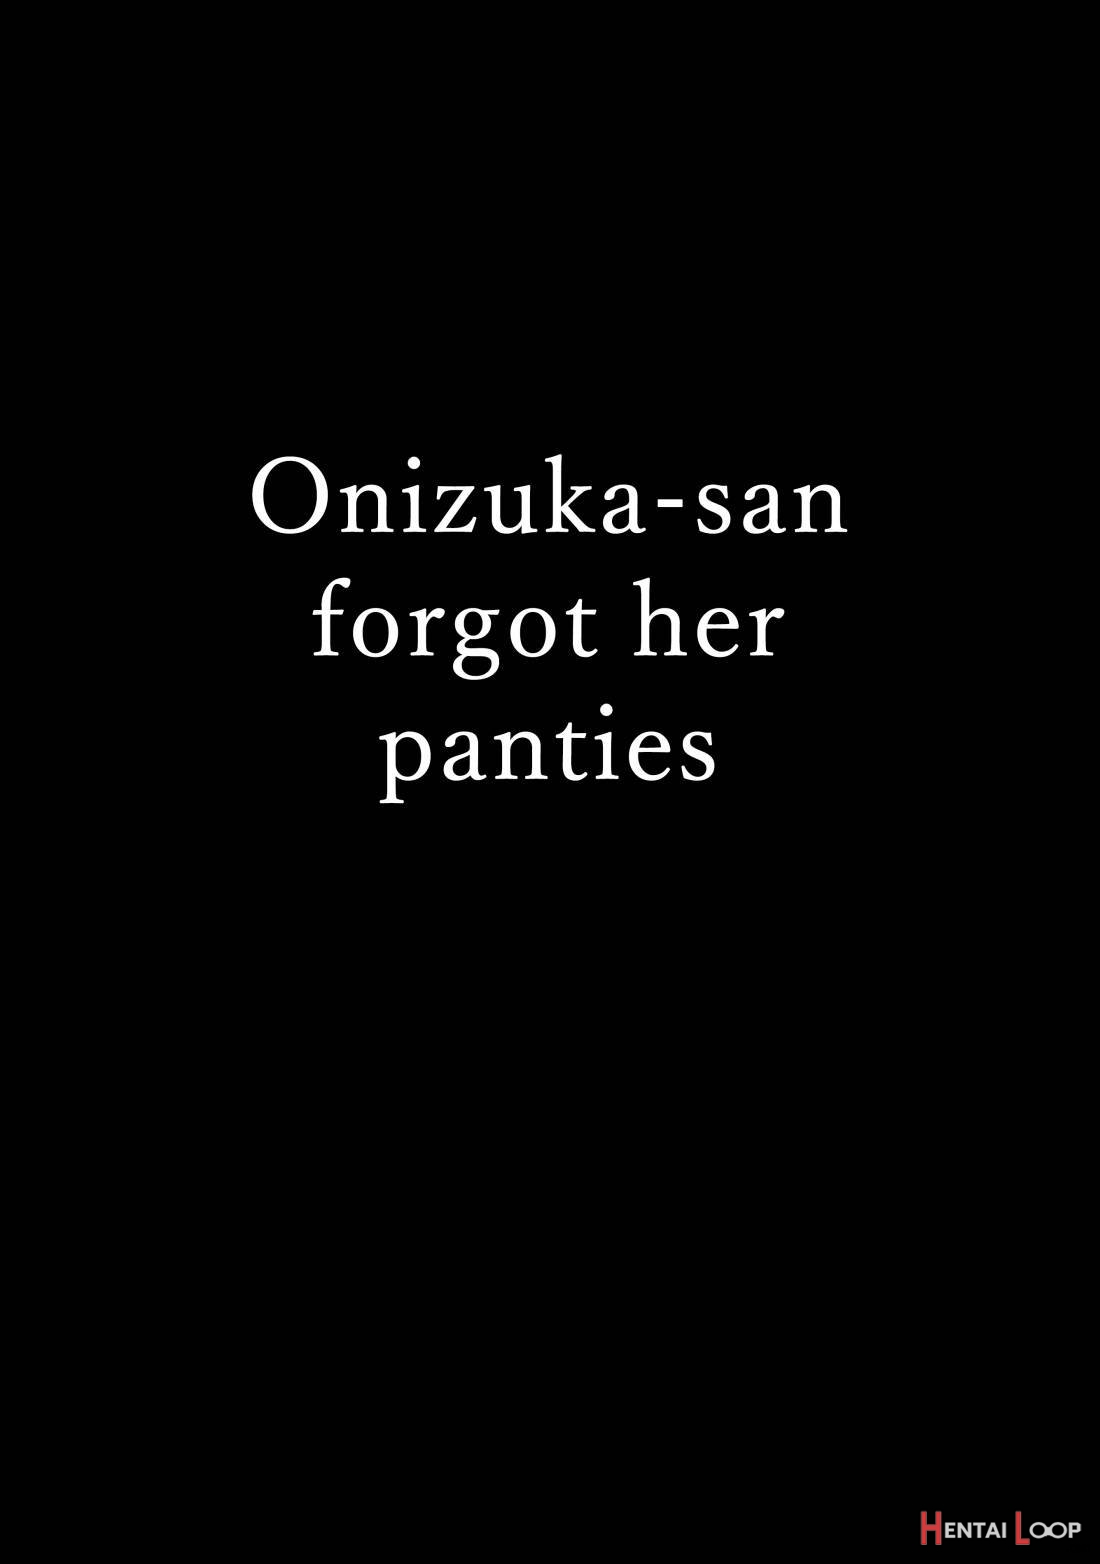 Onizuka-san Panty Wasureru page 4